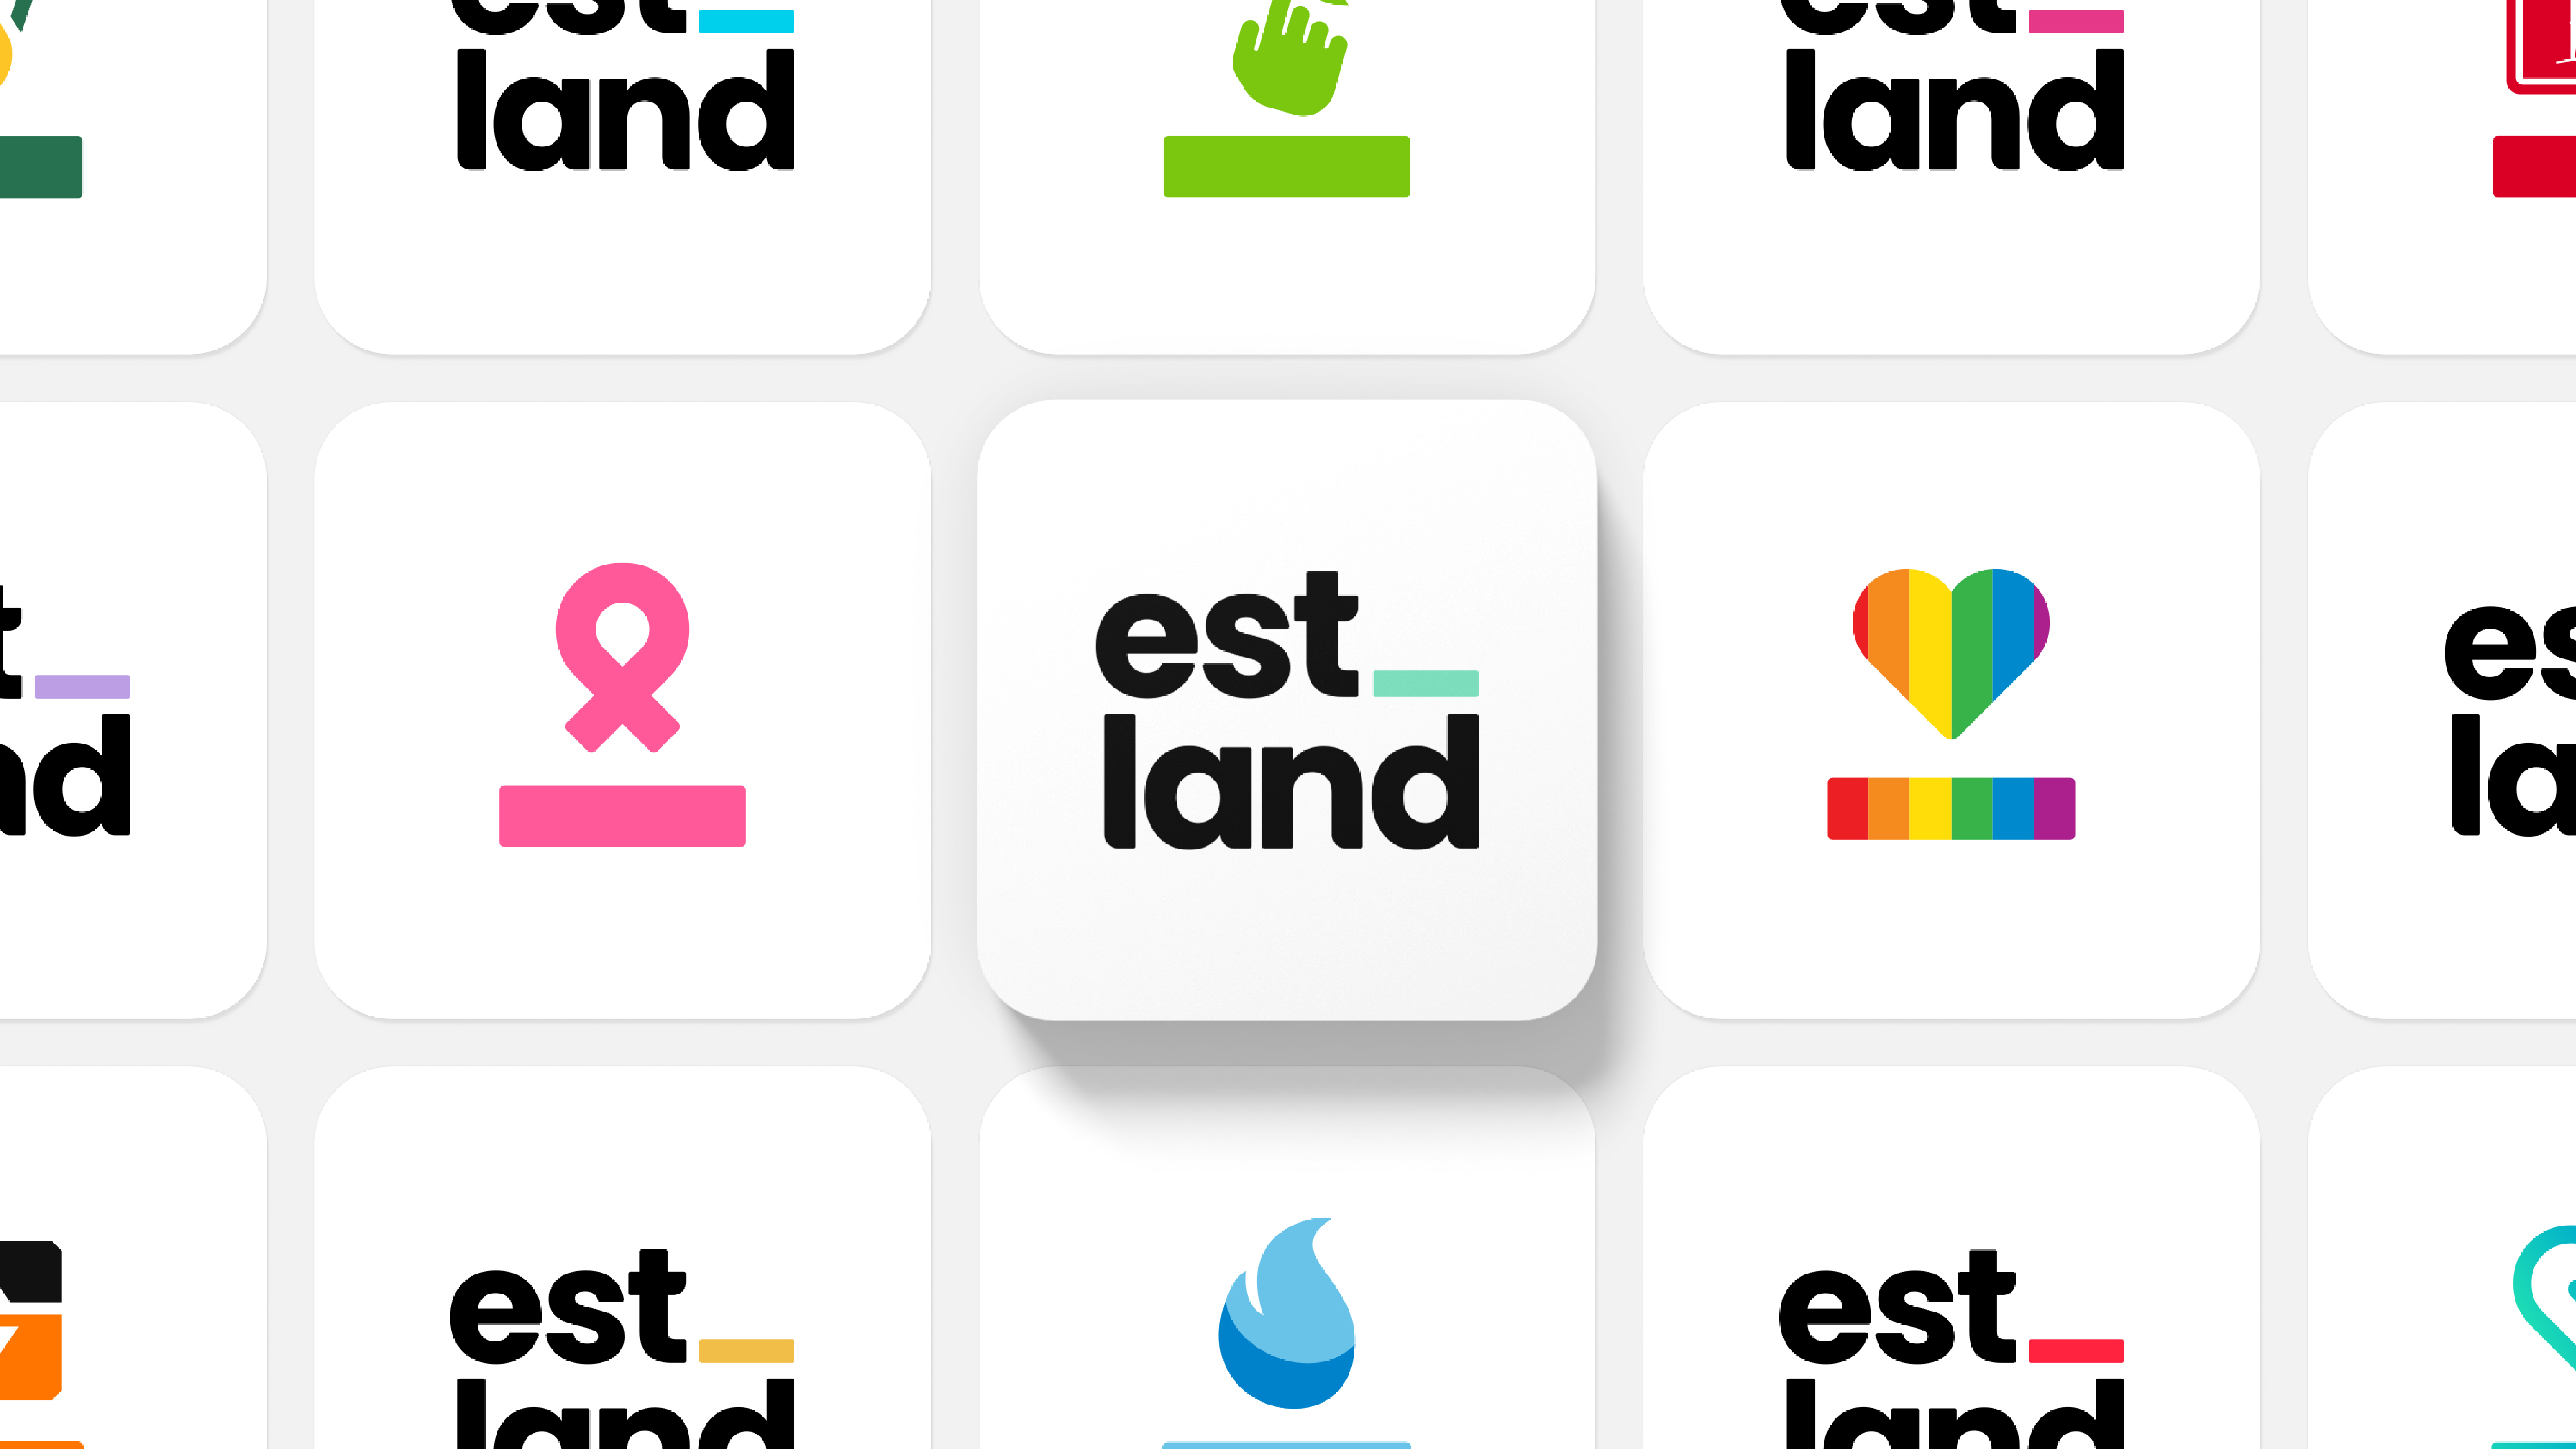 Estland's business name displayed in logo